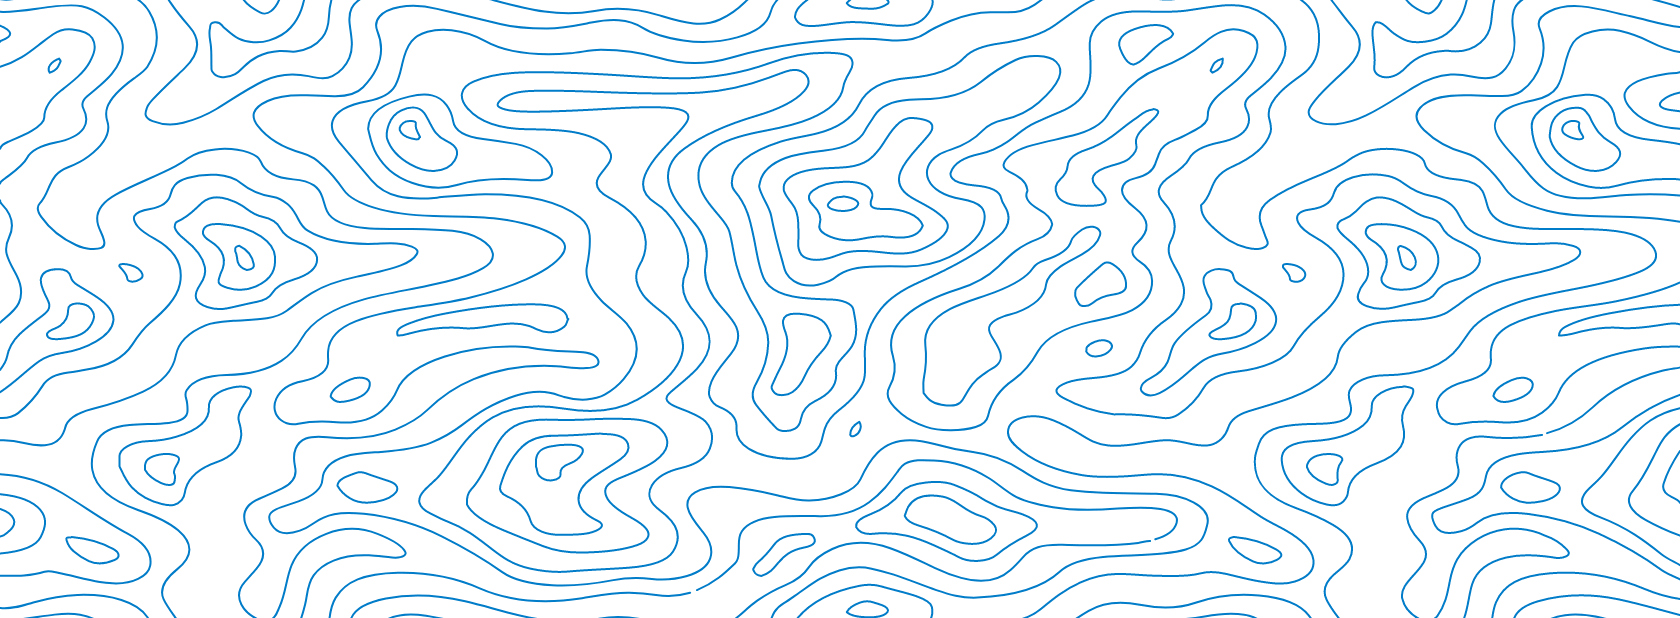 Swirl background graphic